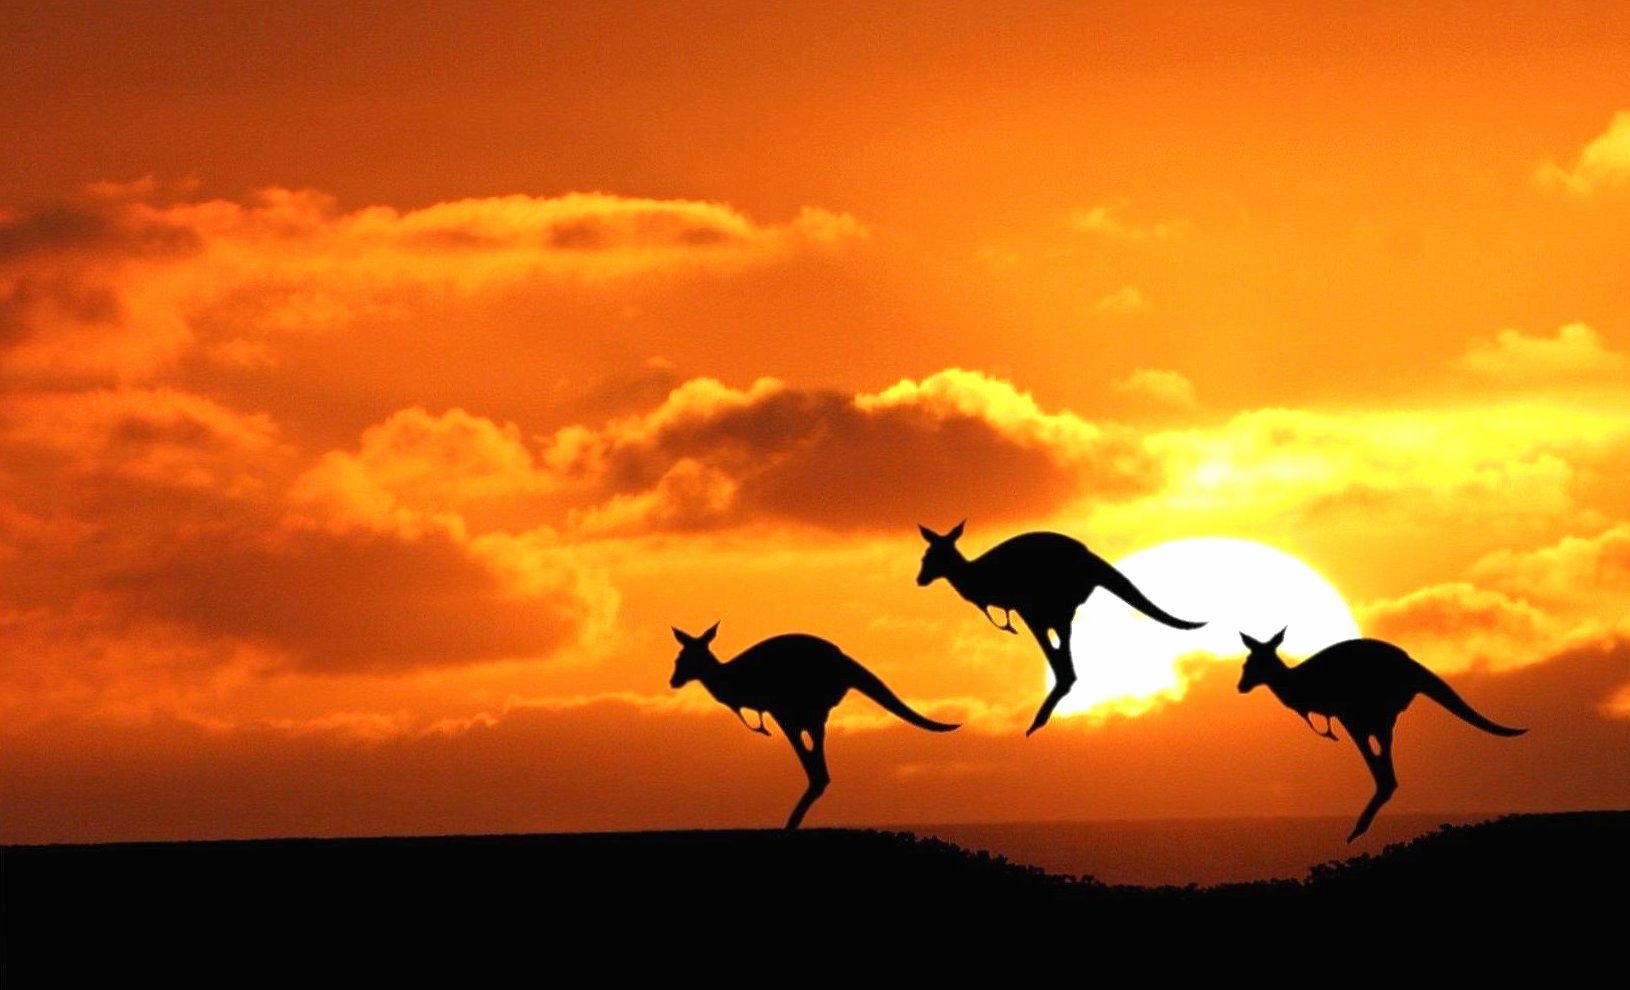 Sunset kangaroo at 1024 x 768 size wallpapers HD quality